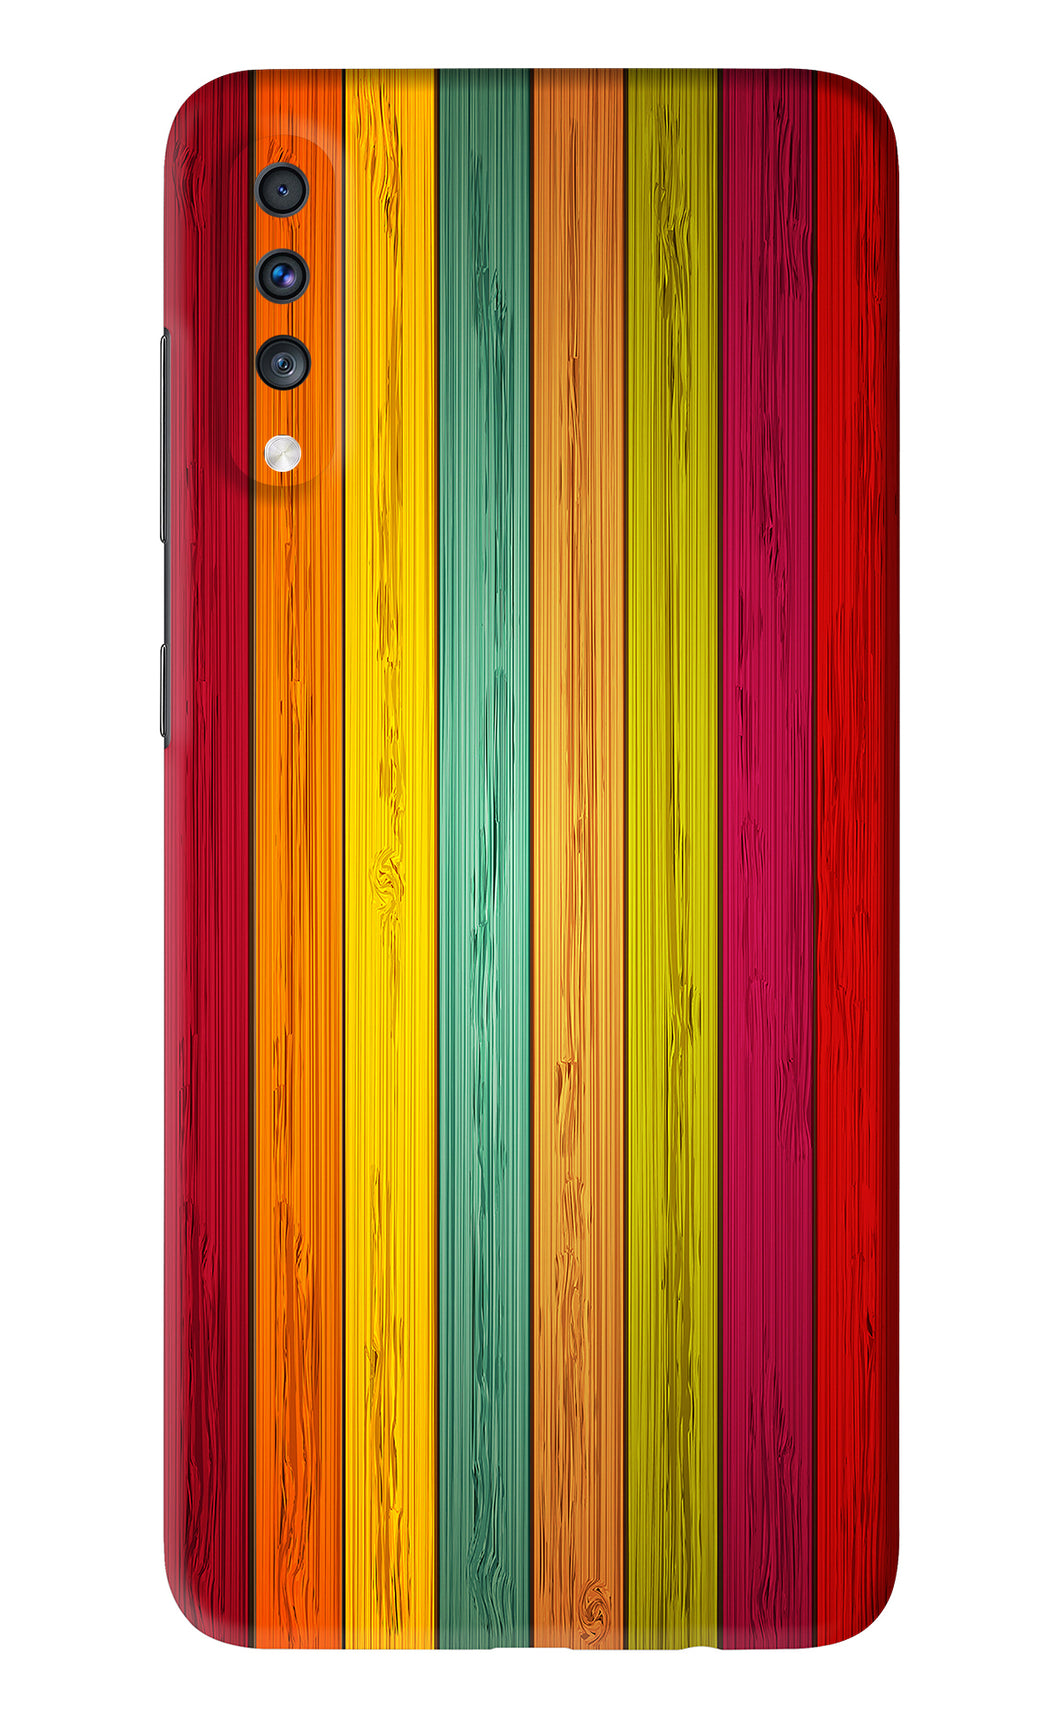 Multicolor Wooden Samsung Galaxy A70 Back Skin Wrap